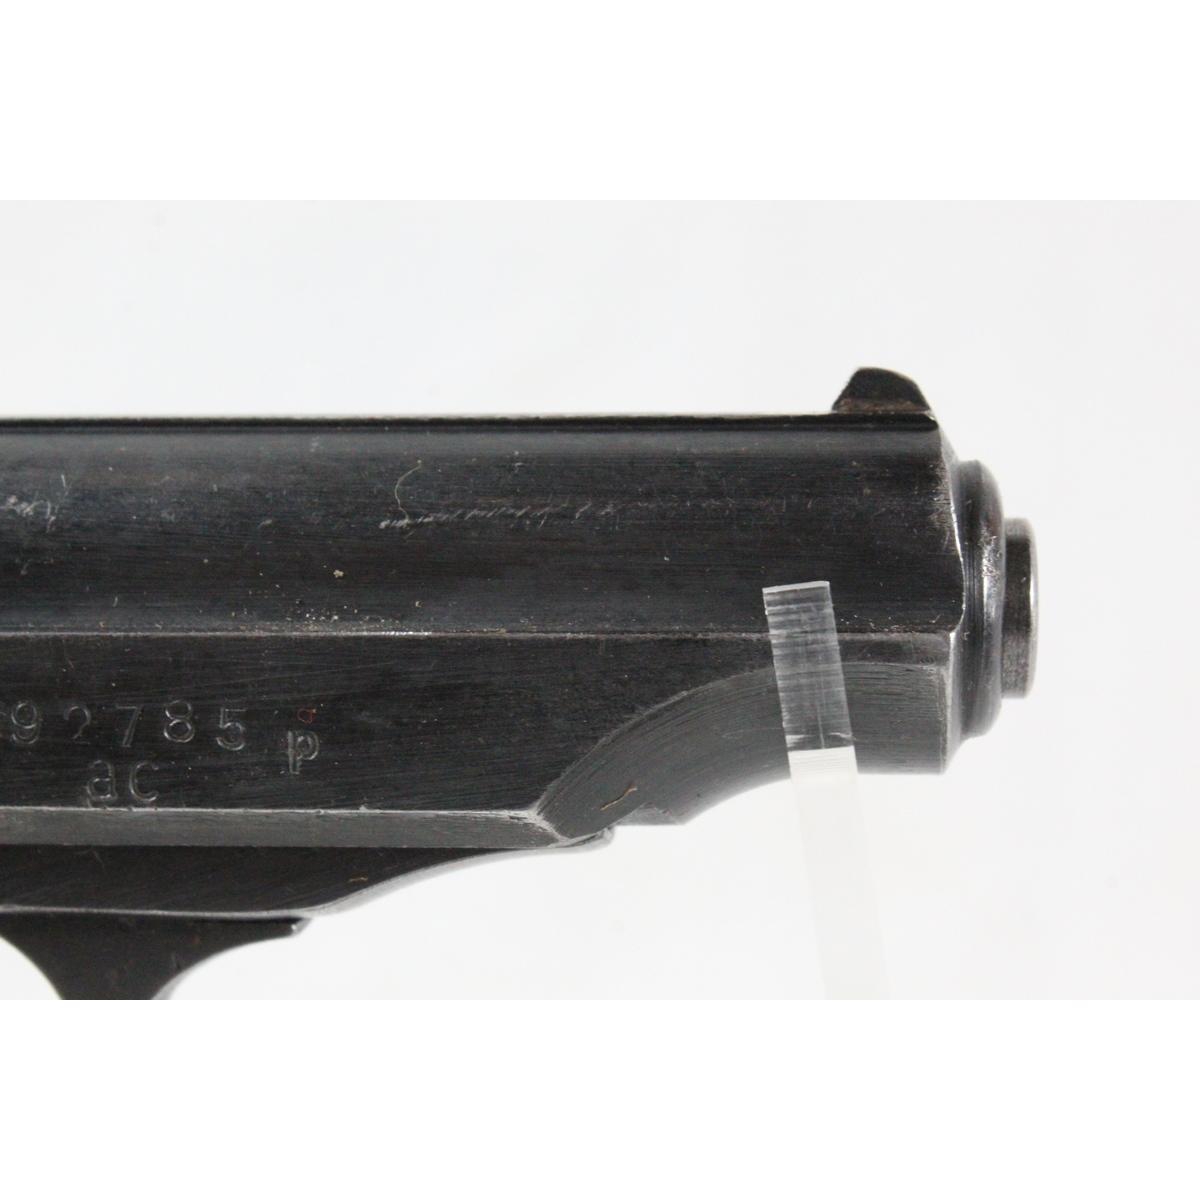 Walther PPK Pistol Caliber 32